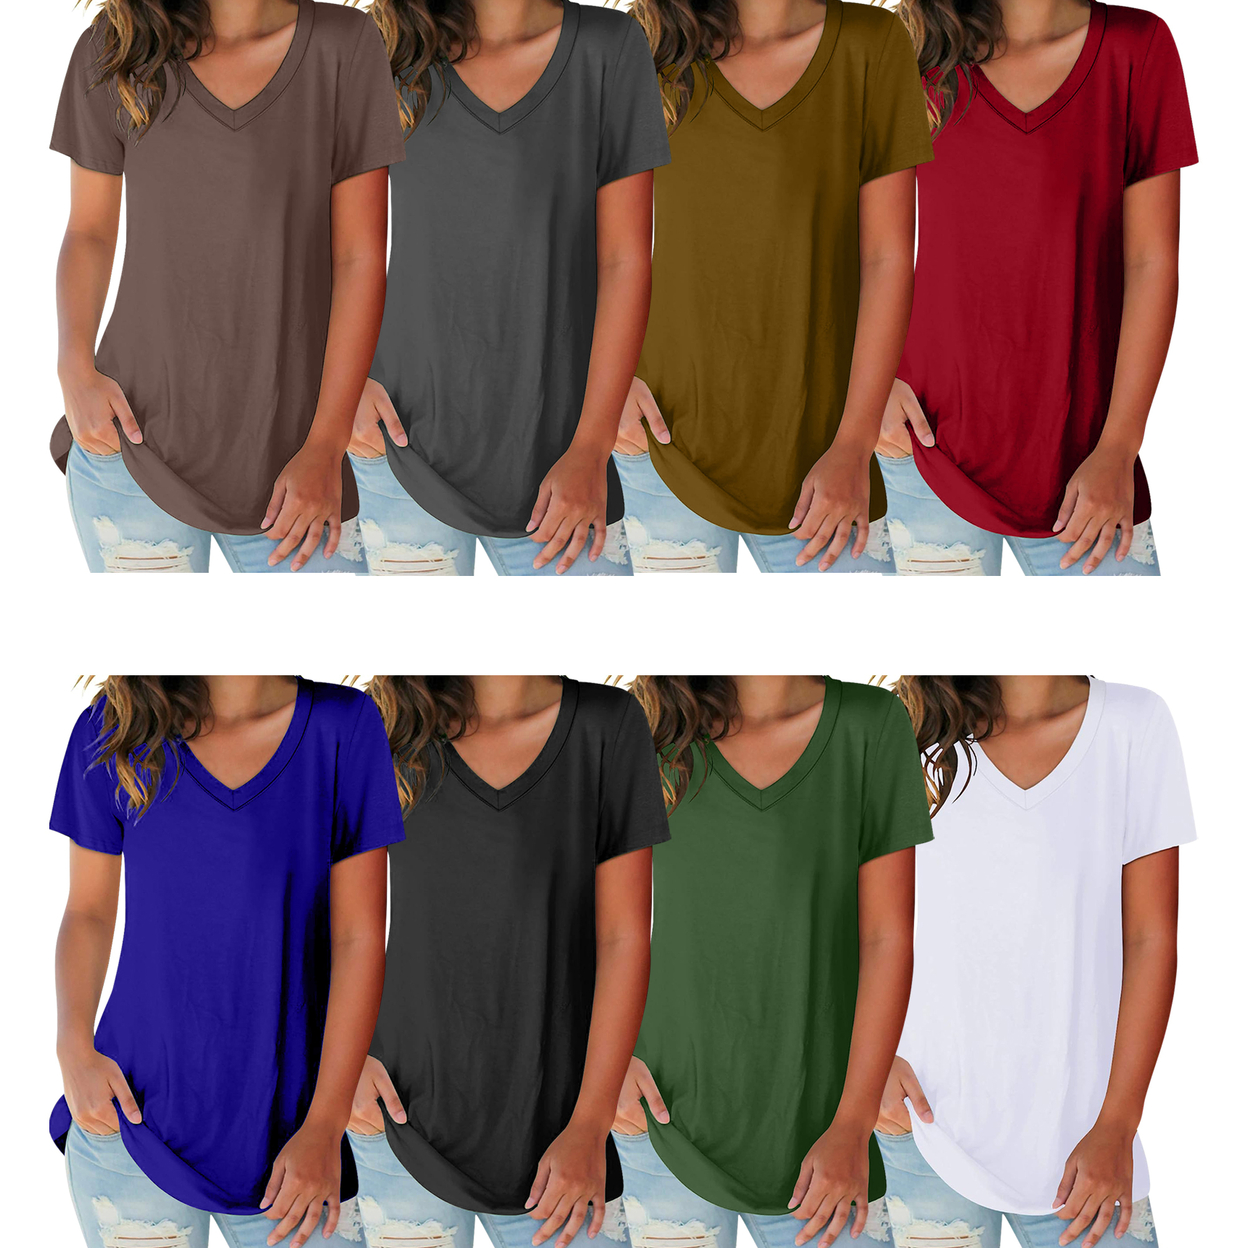 2-Pack: Women's Ultra Soft Smooth Cotton Blend Basic V-Neck Short Sleeve Shirts - Black & Mustard, X-large